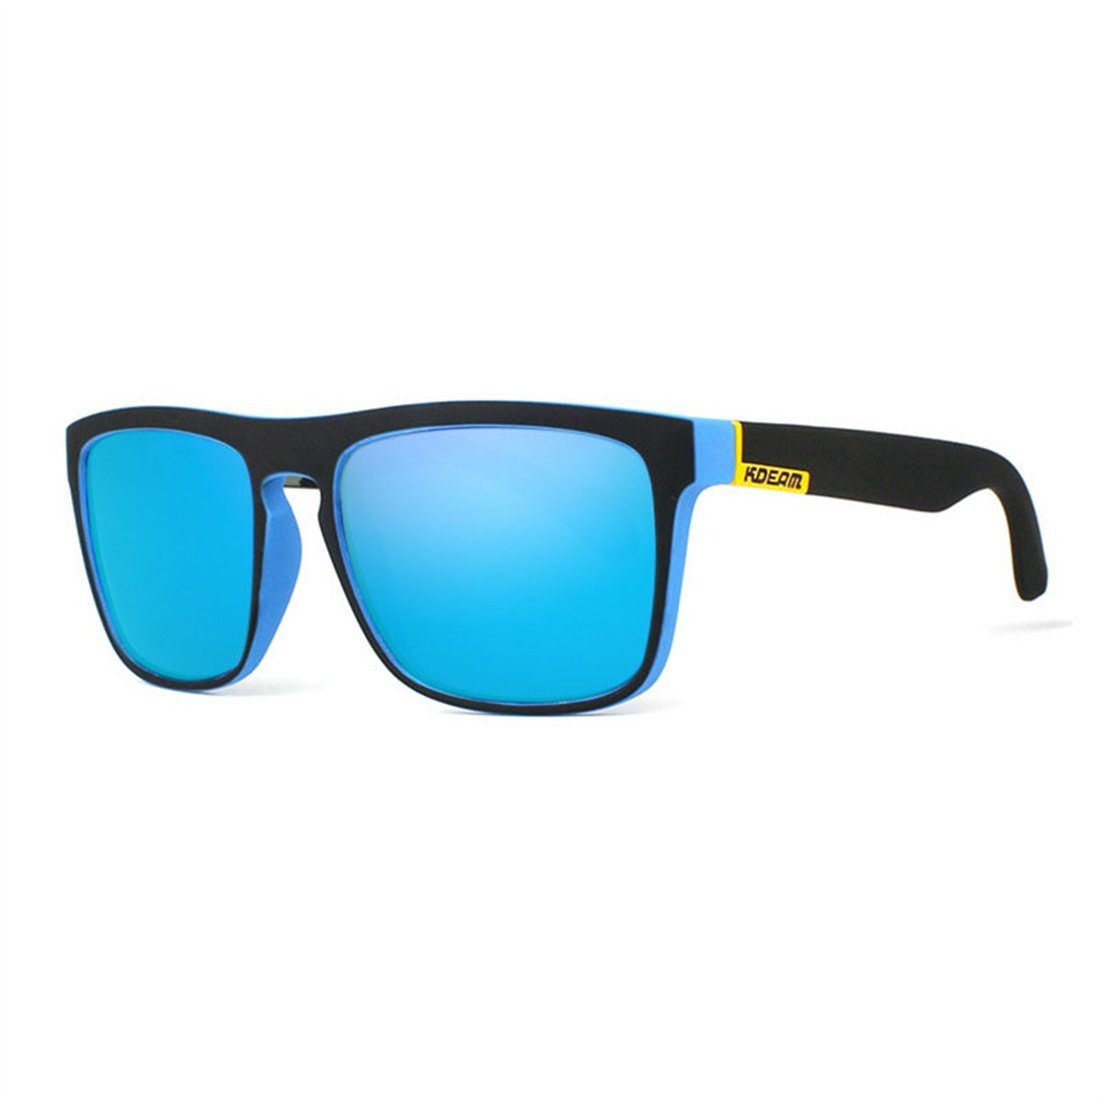 DÖRÖY Sonnenbrille Polarisierende Sonnenbrillen für Männer und Frauen, Sonnenbrillen | Sonnenbrillen